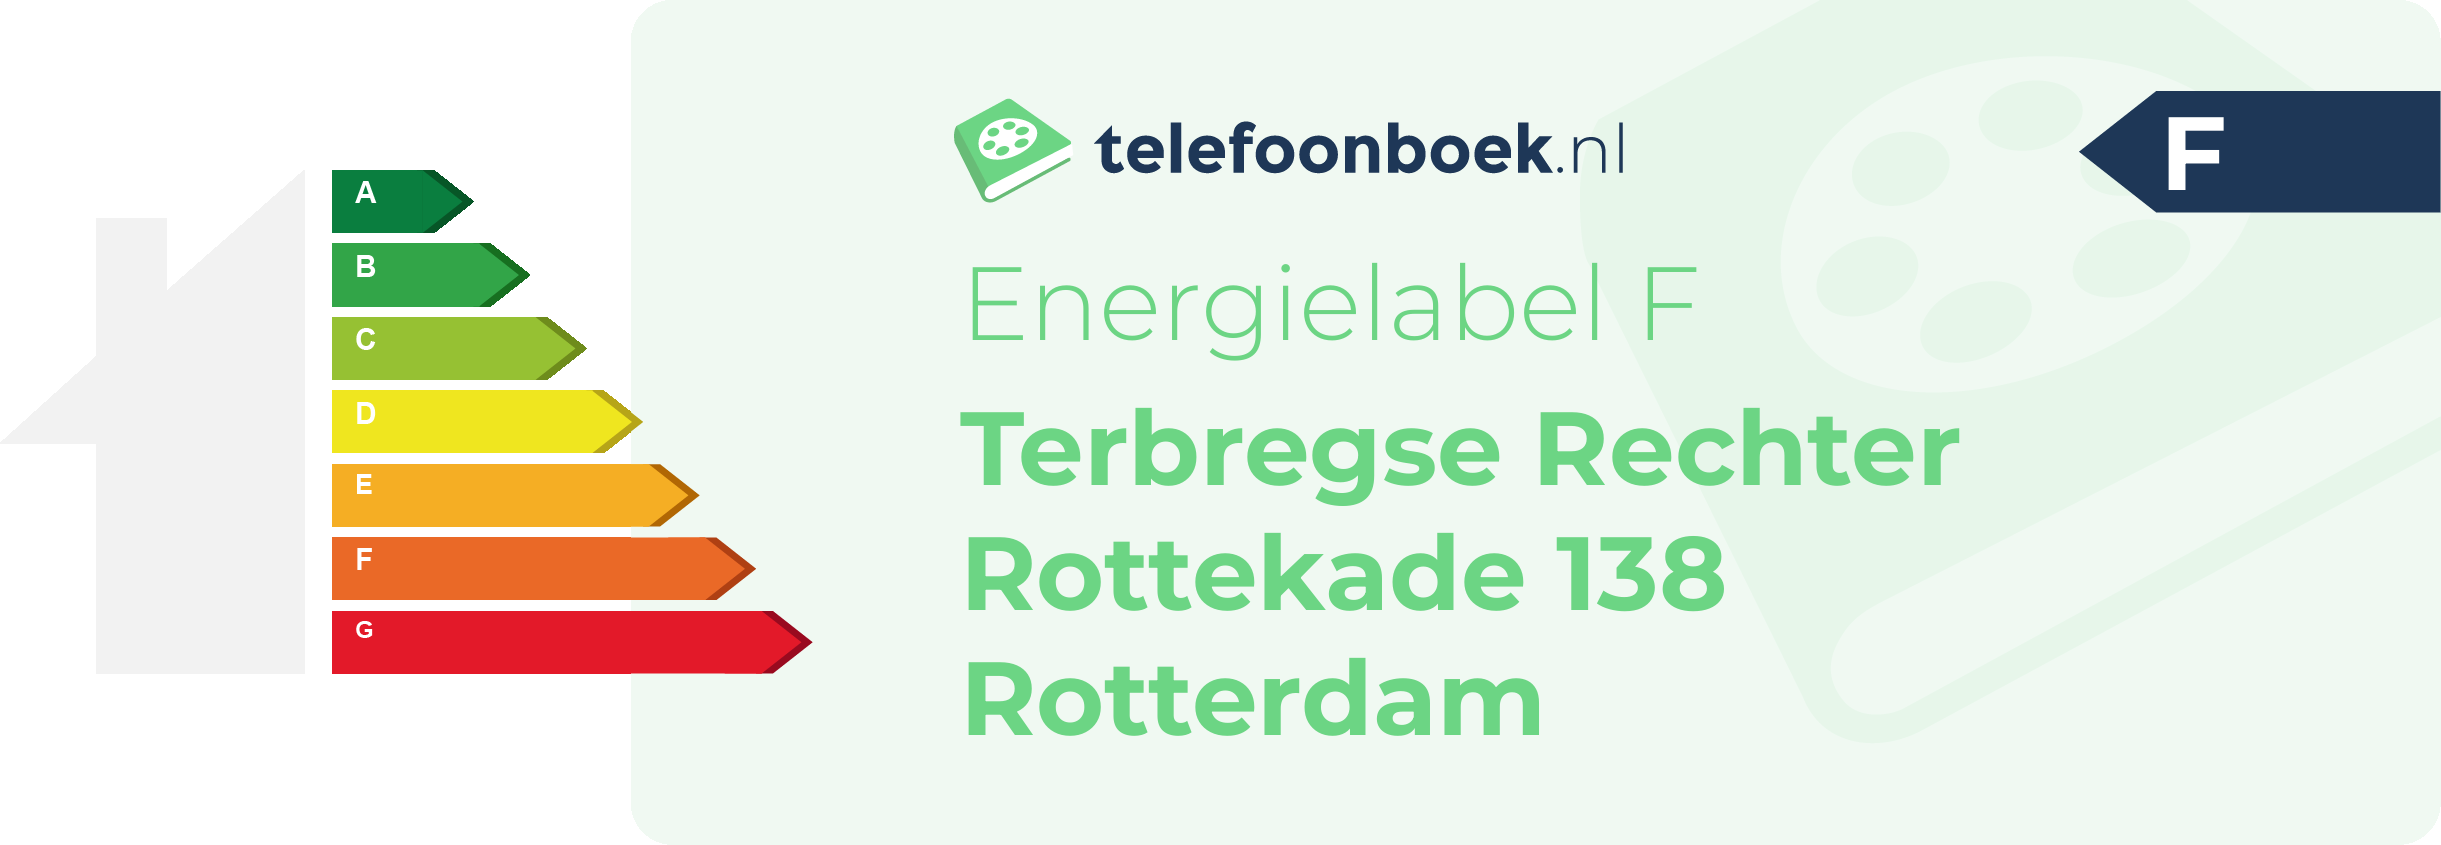 Energielabel Terbregse Rechter Rottekade 138 Rotterdam